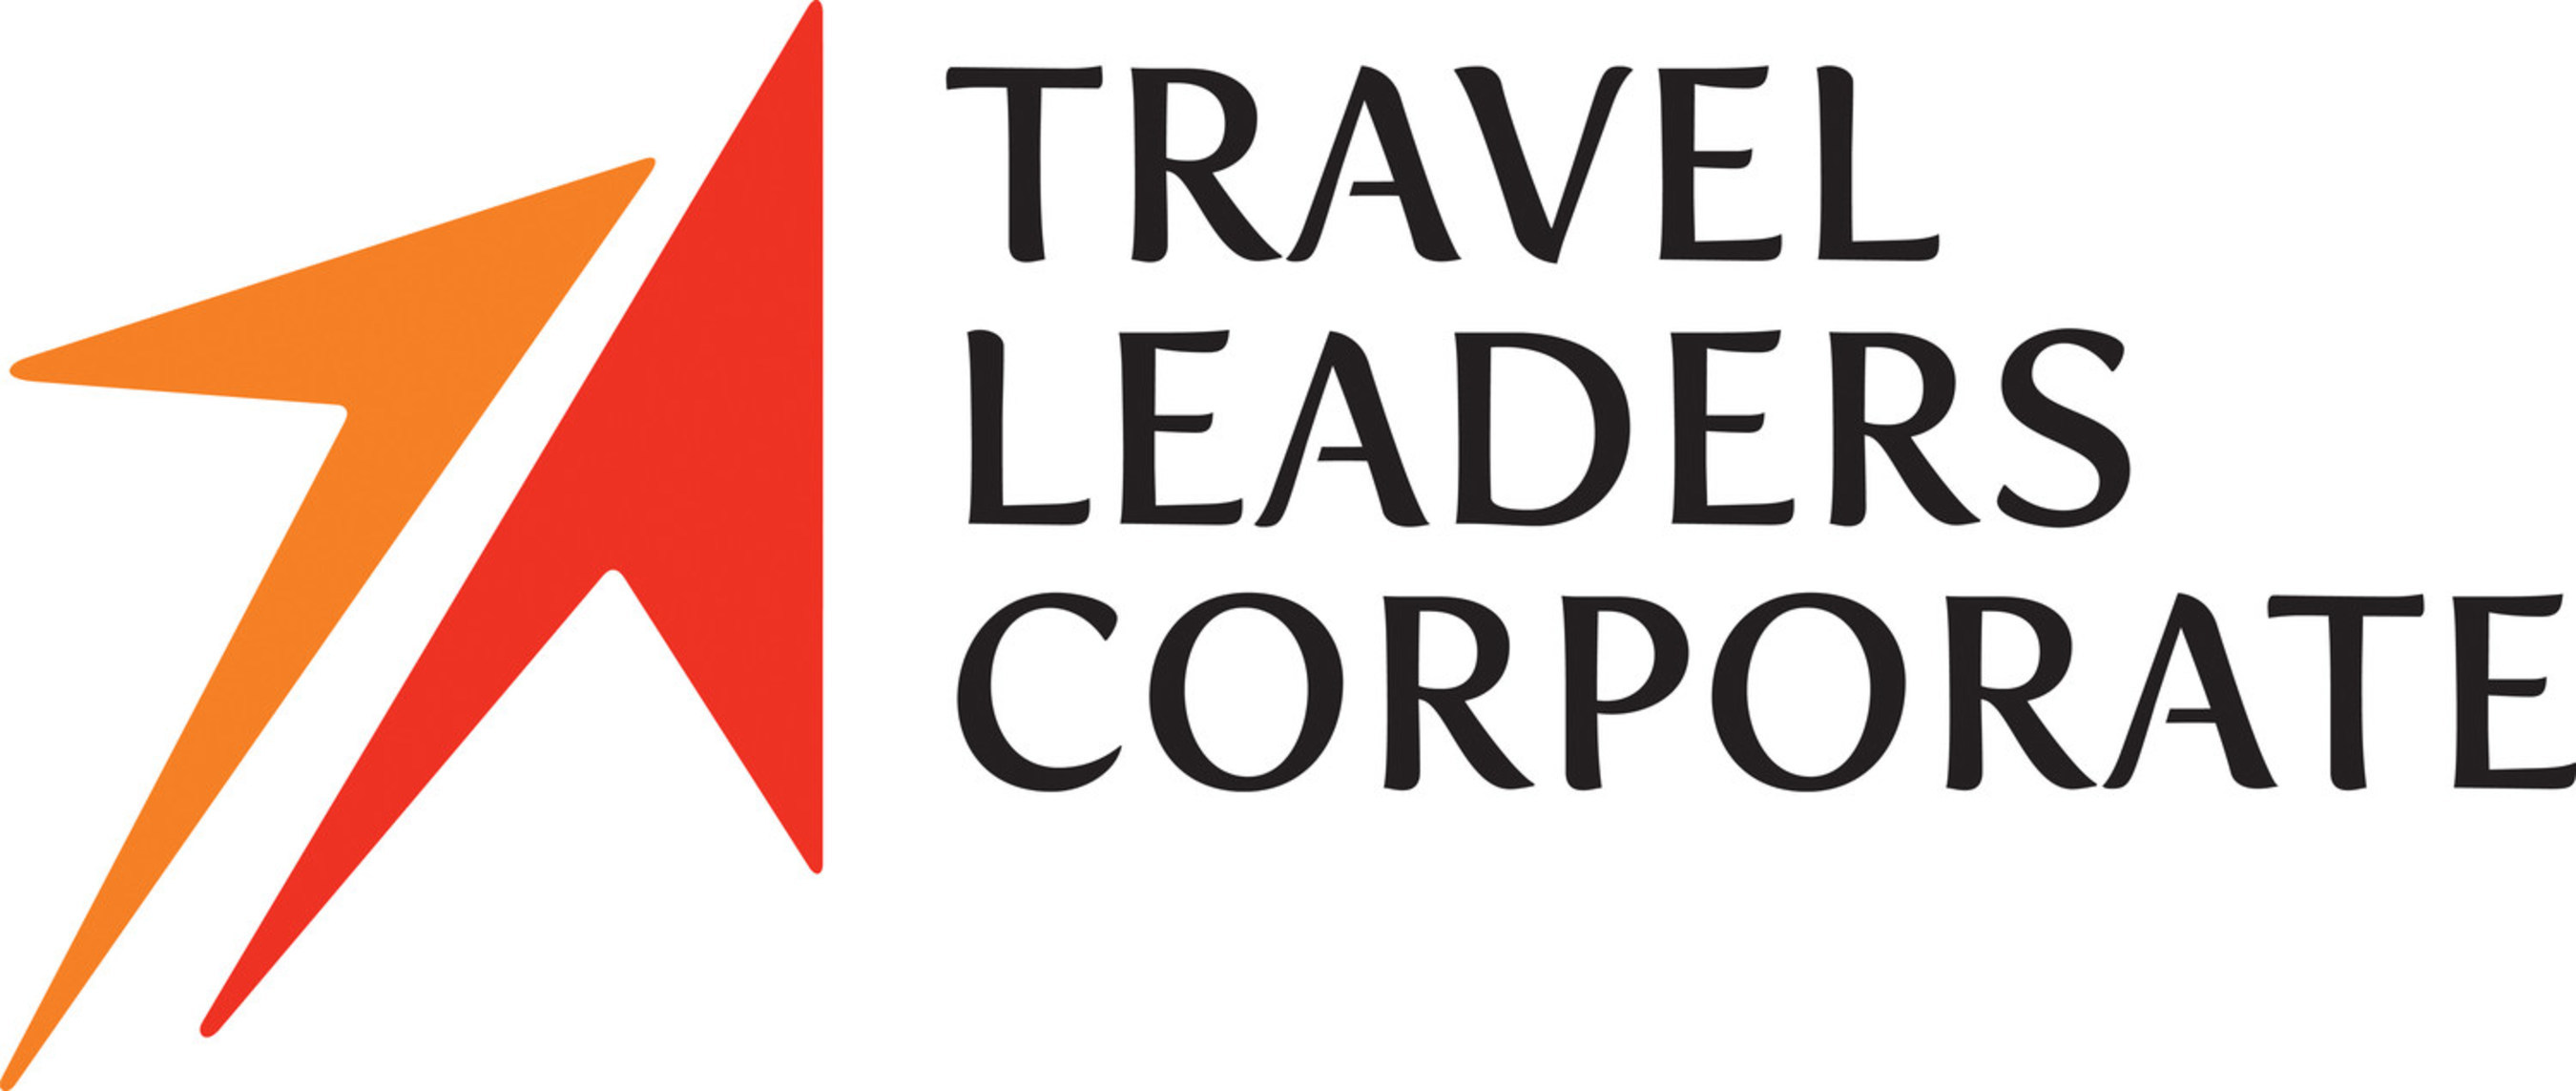 travel leaders franchise group